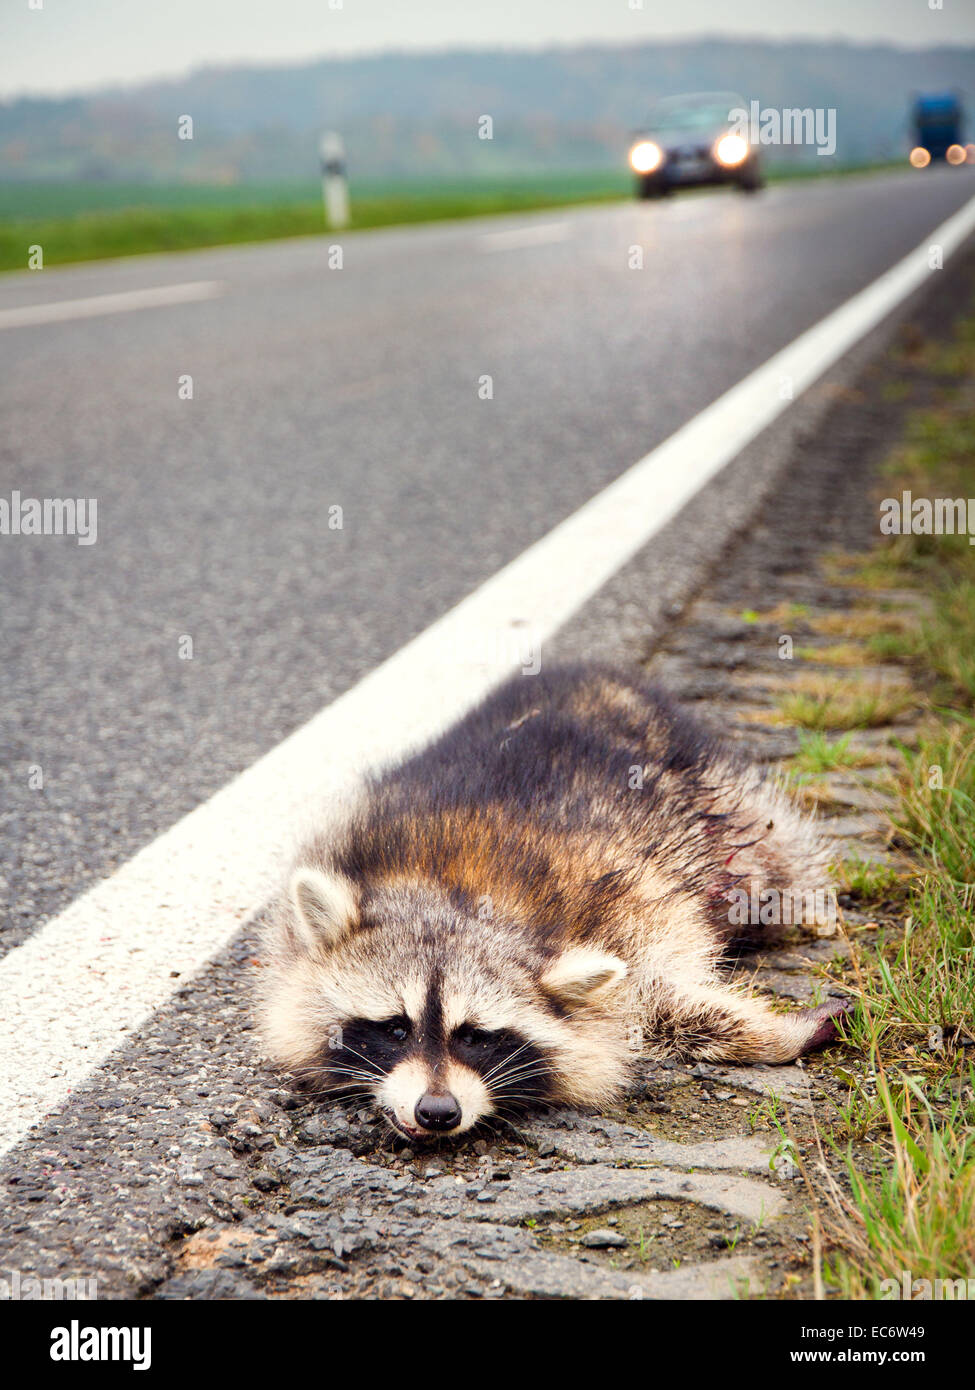 dead raccoon clipart image